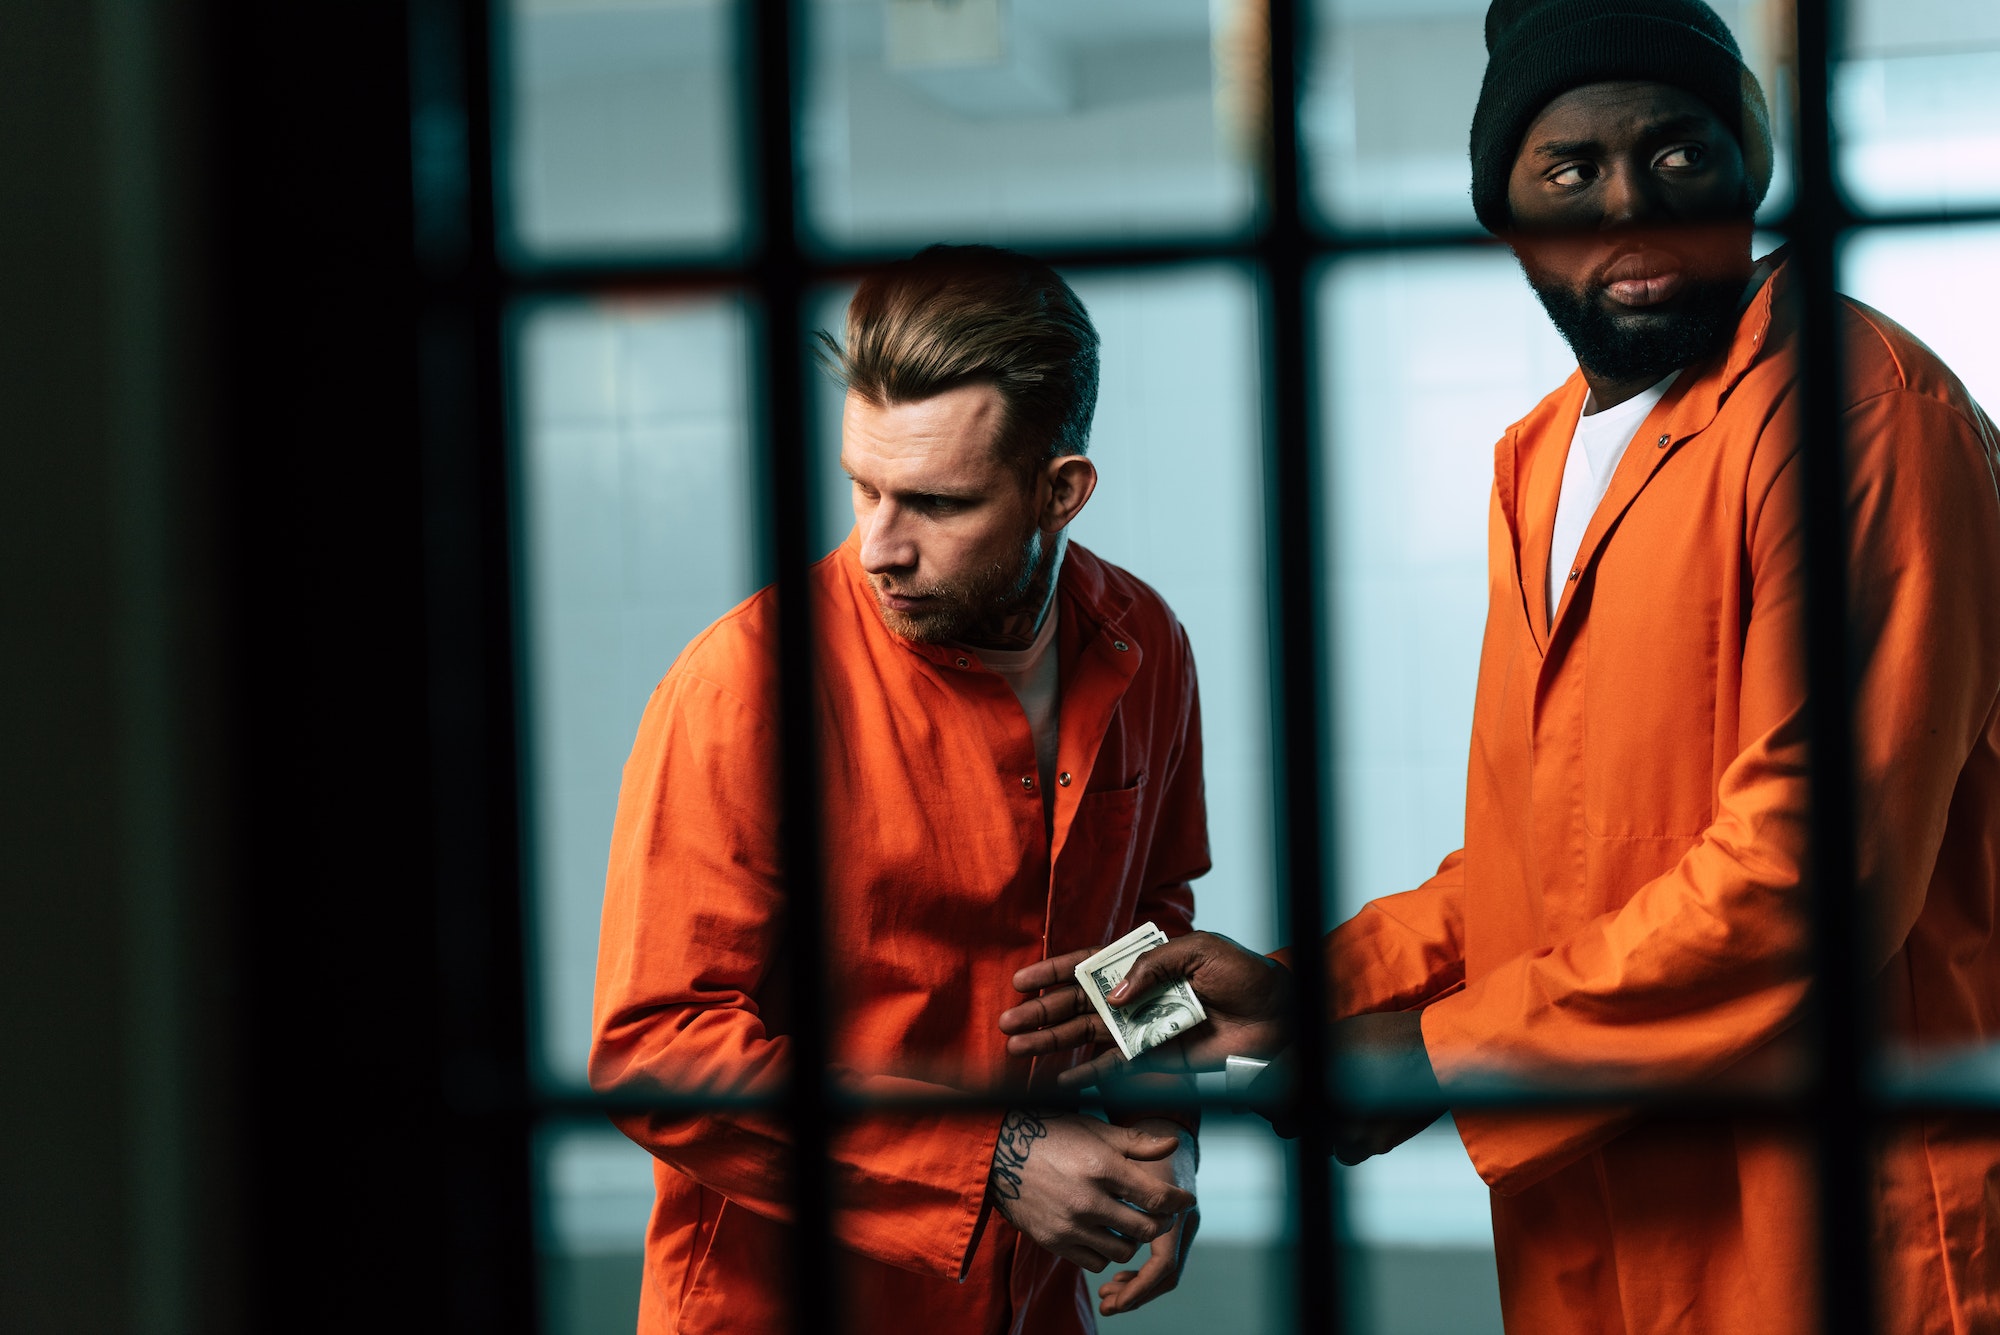 prisoner buying drugs at african american inmate in prison room